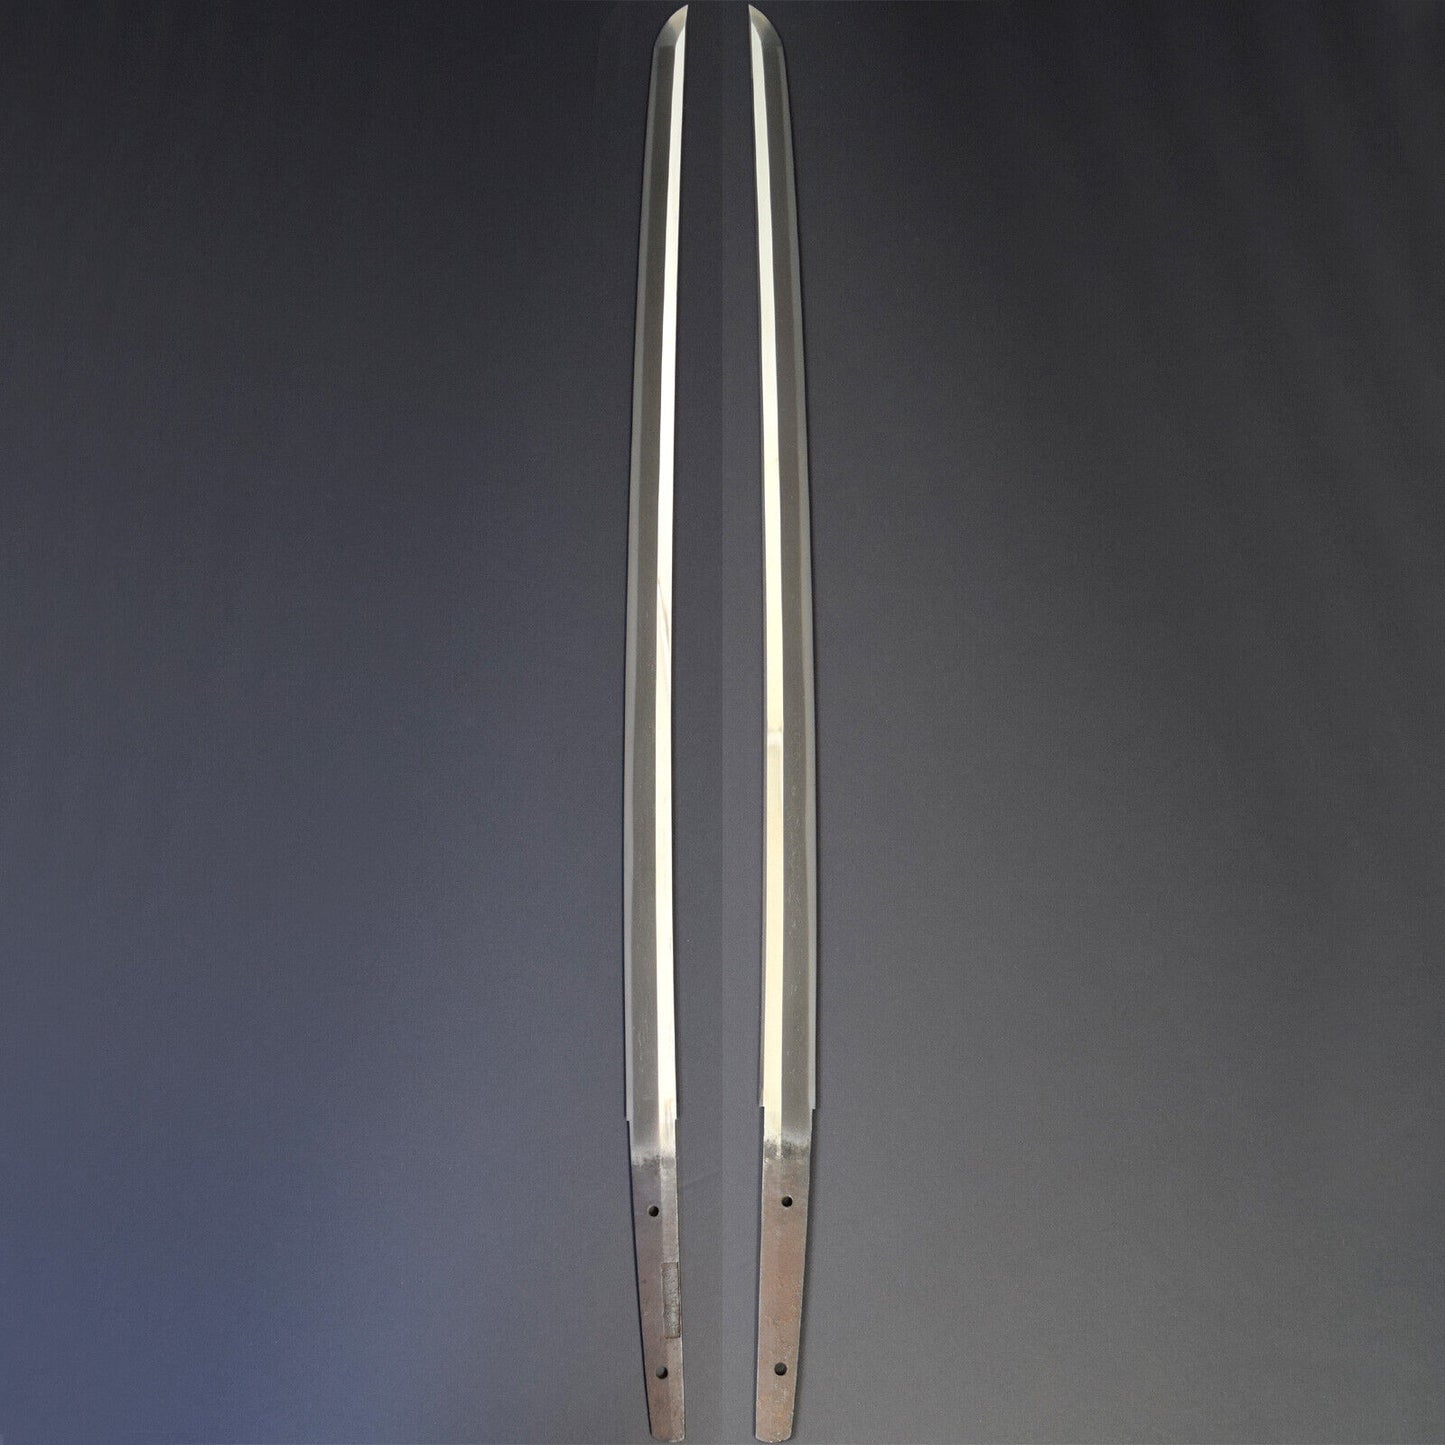 Antique Sword Nihonto Japanese Katana Samurai Weapon Blade Rare Muromachi Era Collectible.